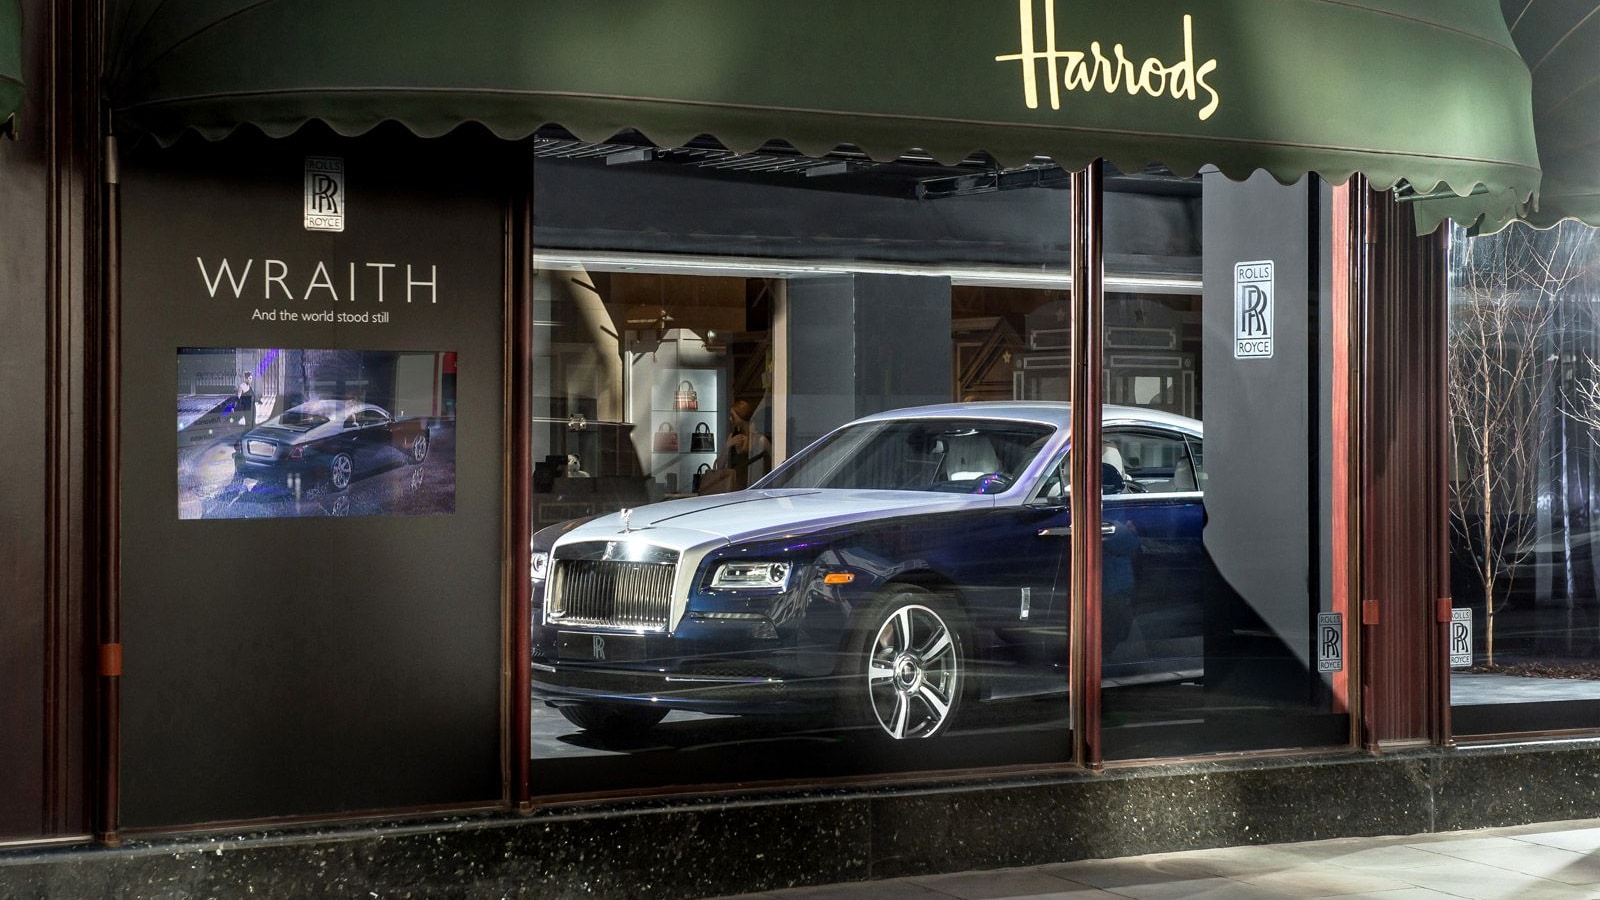 2014 Rolls-Royce Wraith at Harrods, London